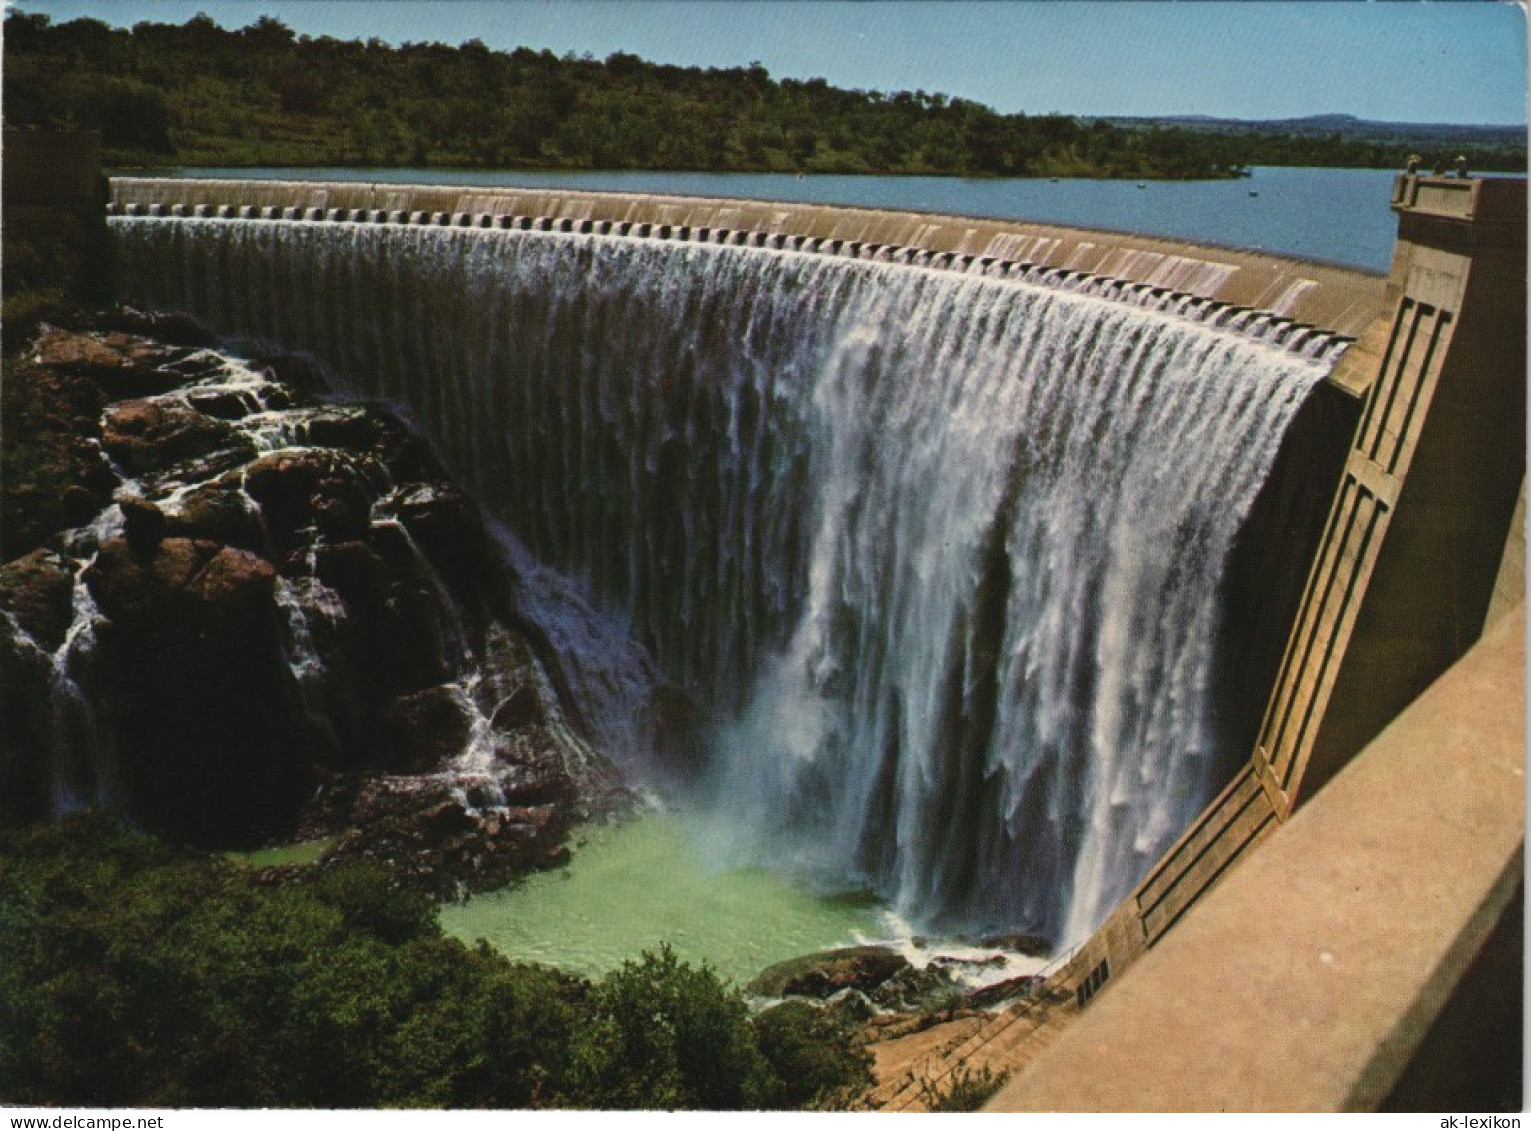 Südafrika Roodeplaat Dam In The Pienaar's River, Staudamm Südafrika 1975 - Afrique Du Sud